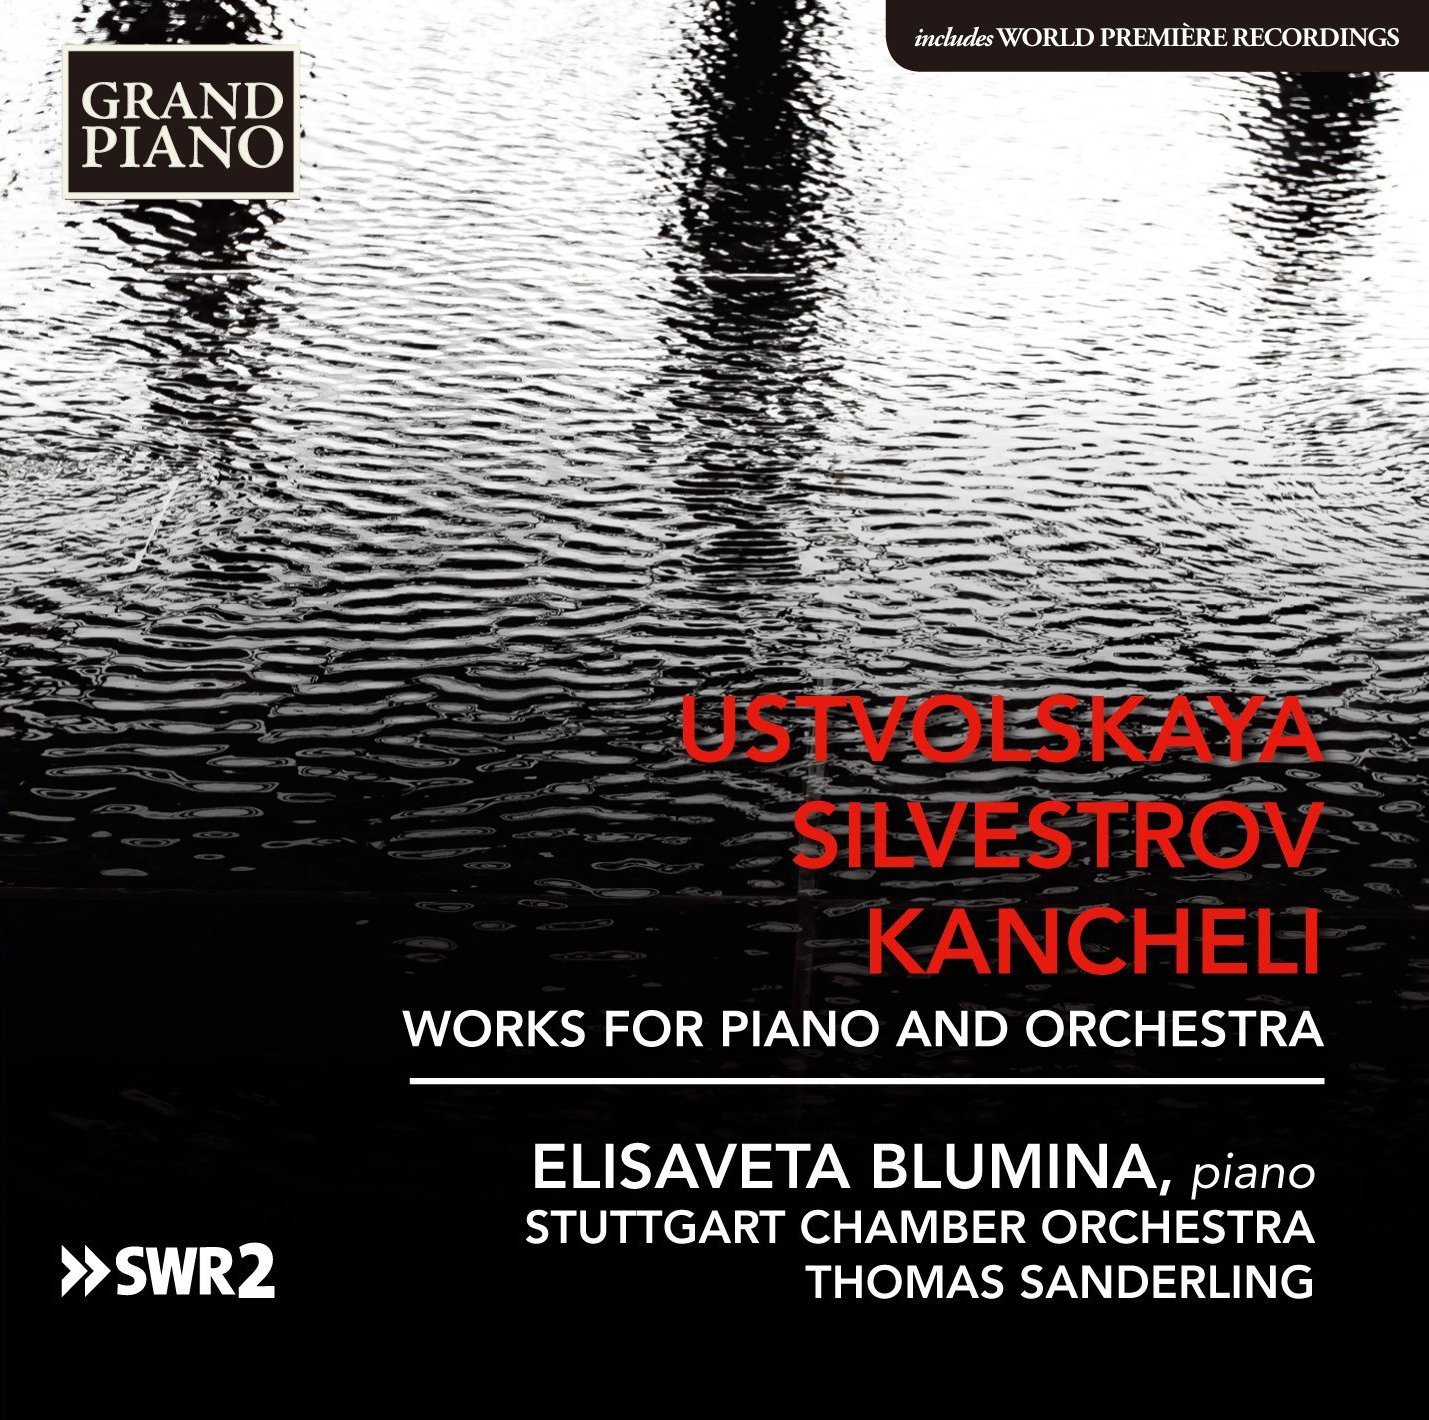 Gapplegate Classical-Modern Music Review: Ustvolskaya, Silvestrov ...